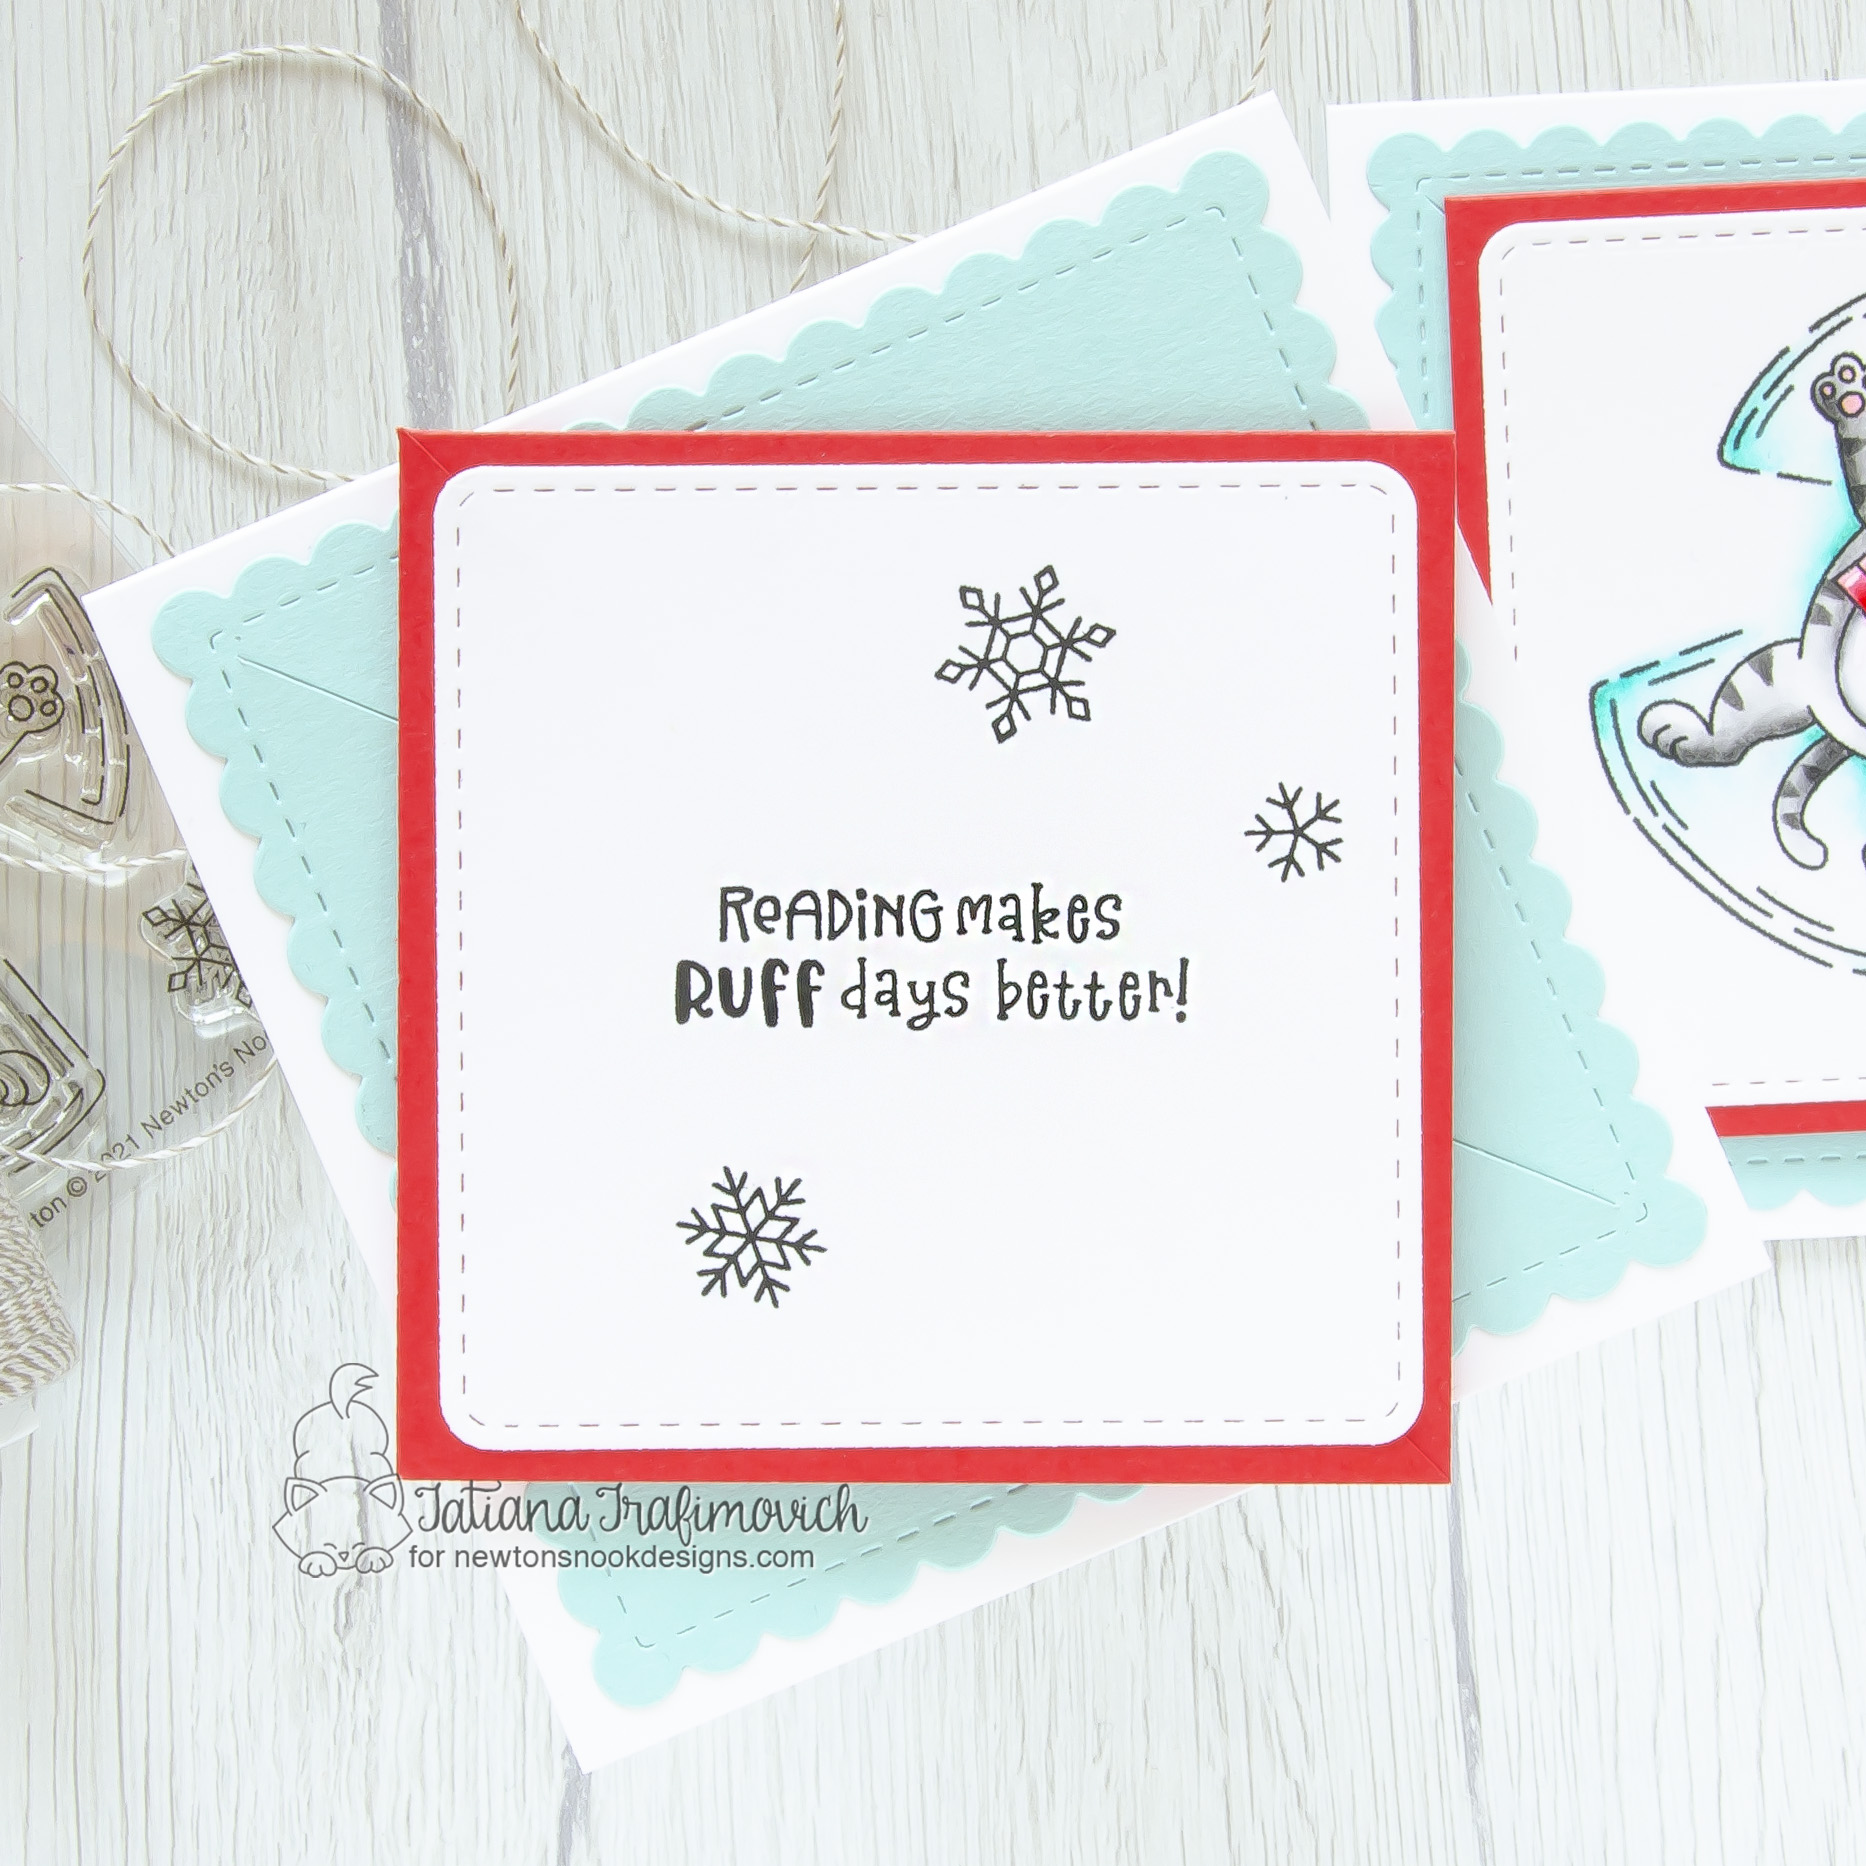 Freeze The Day #handmade card and bookmark by Tatiana Trafimovich #tatianacraftandart - Snow Angel Puppy stamp set by Newton's Nook Designs #newtonsnook